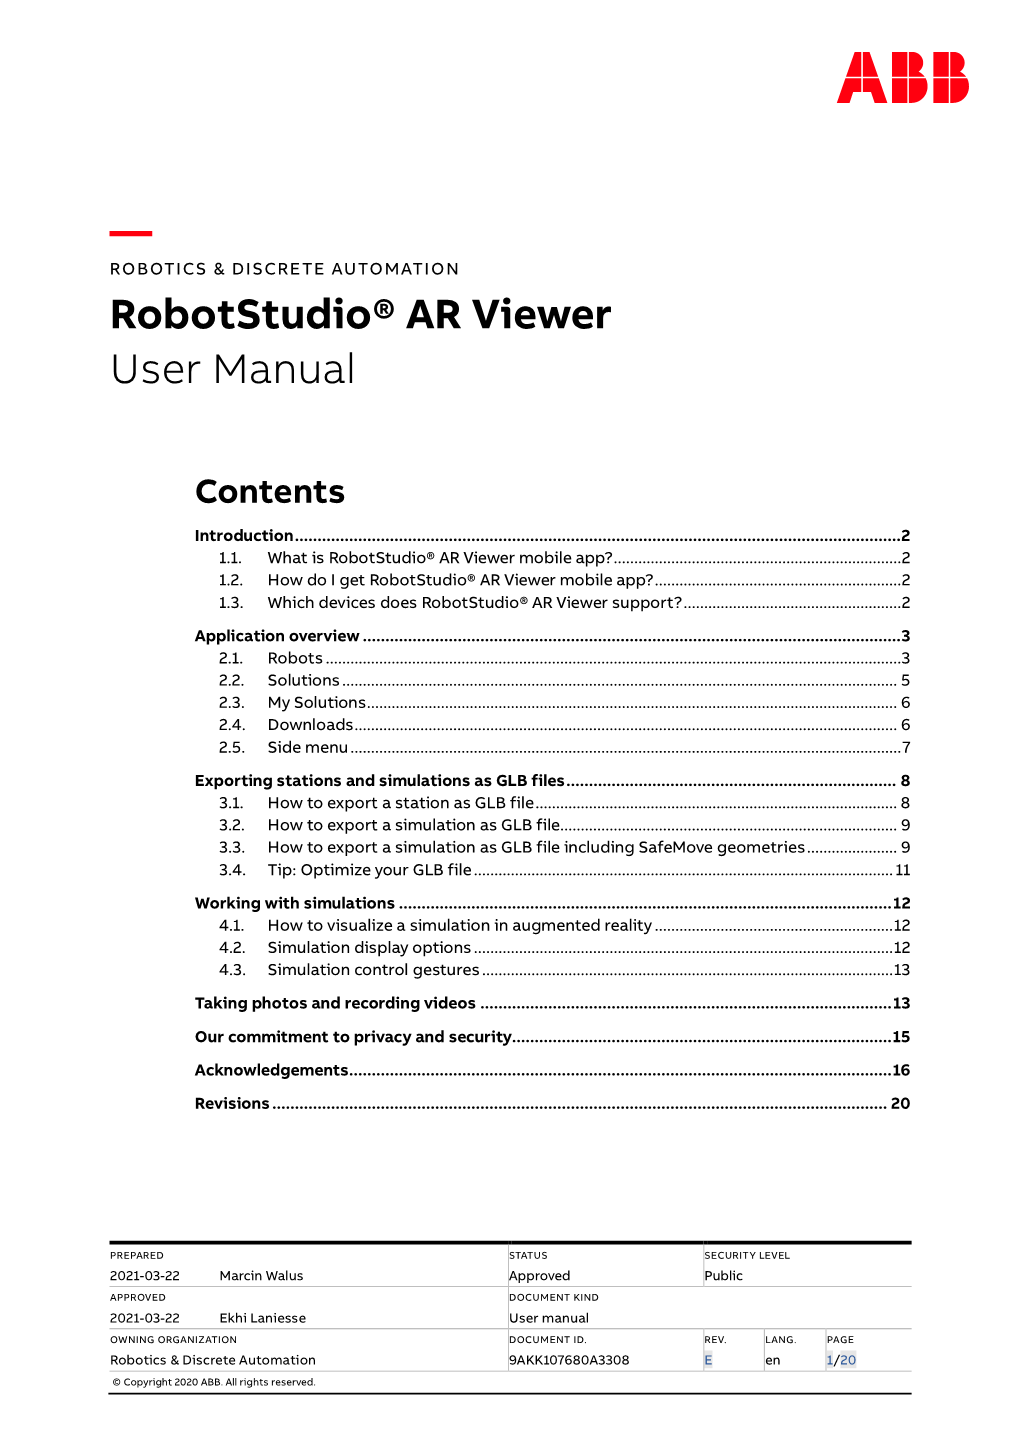 Robotstudio® AR Viewer User Manual